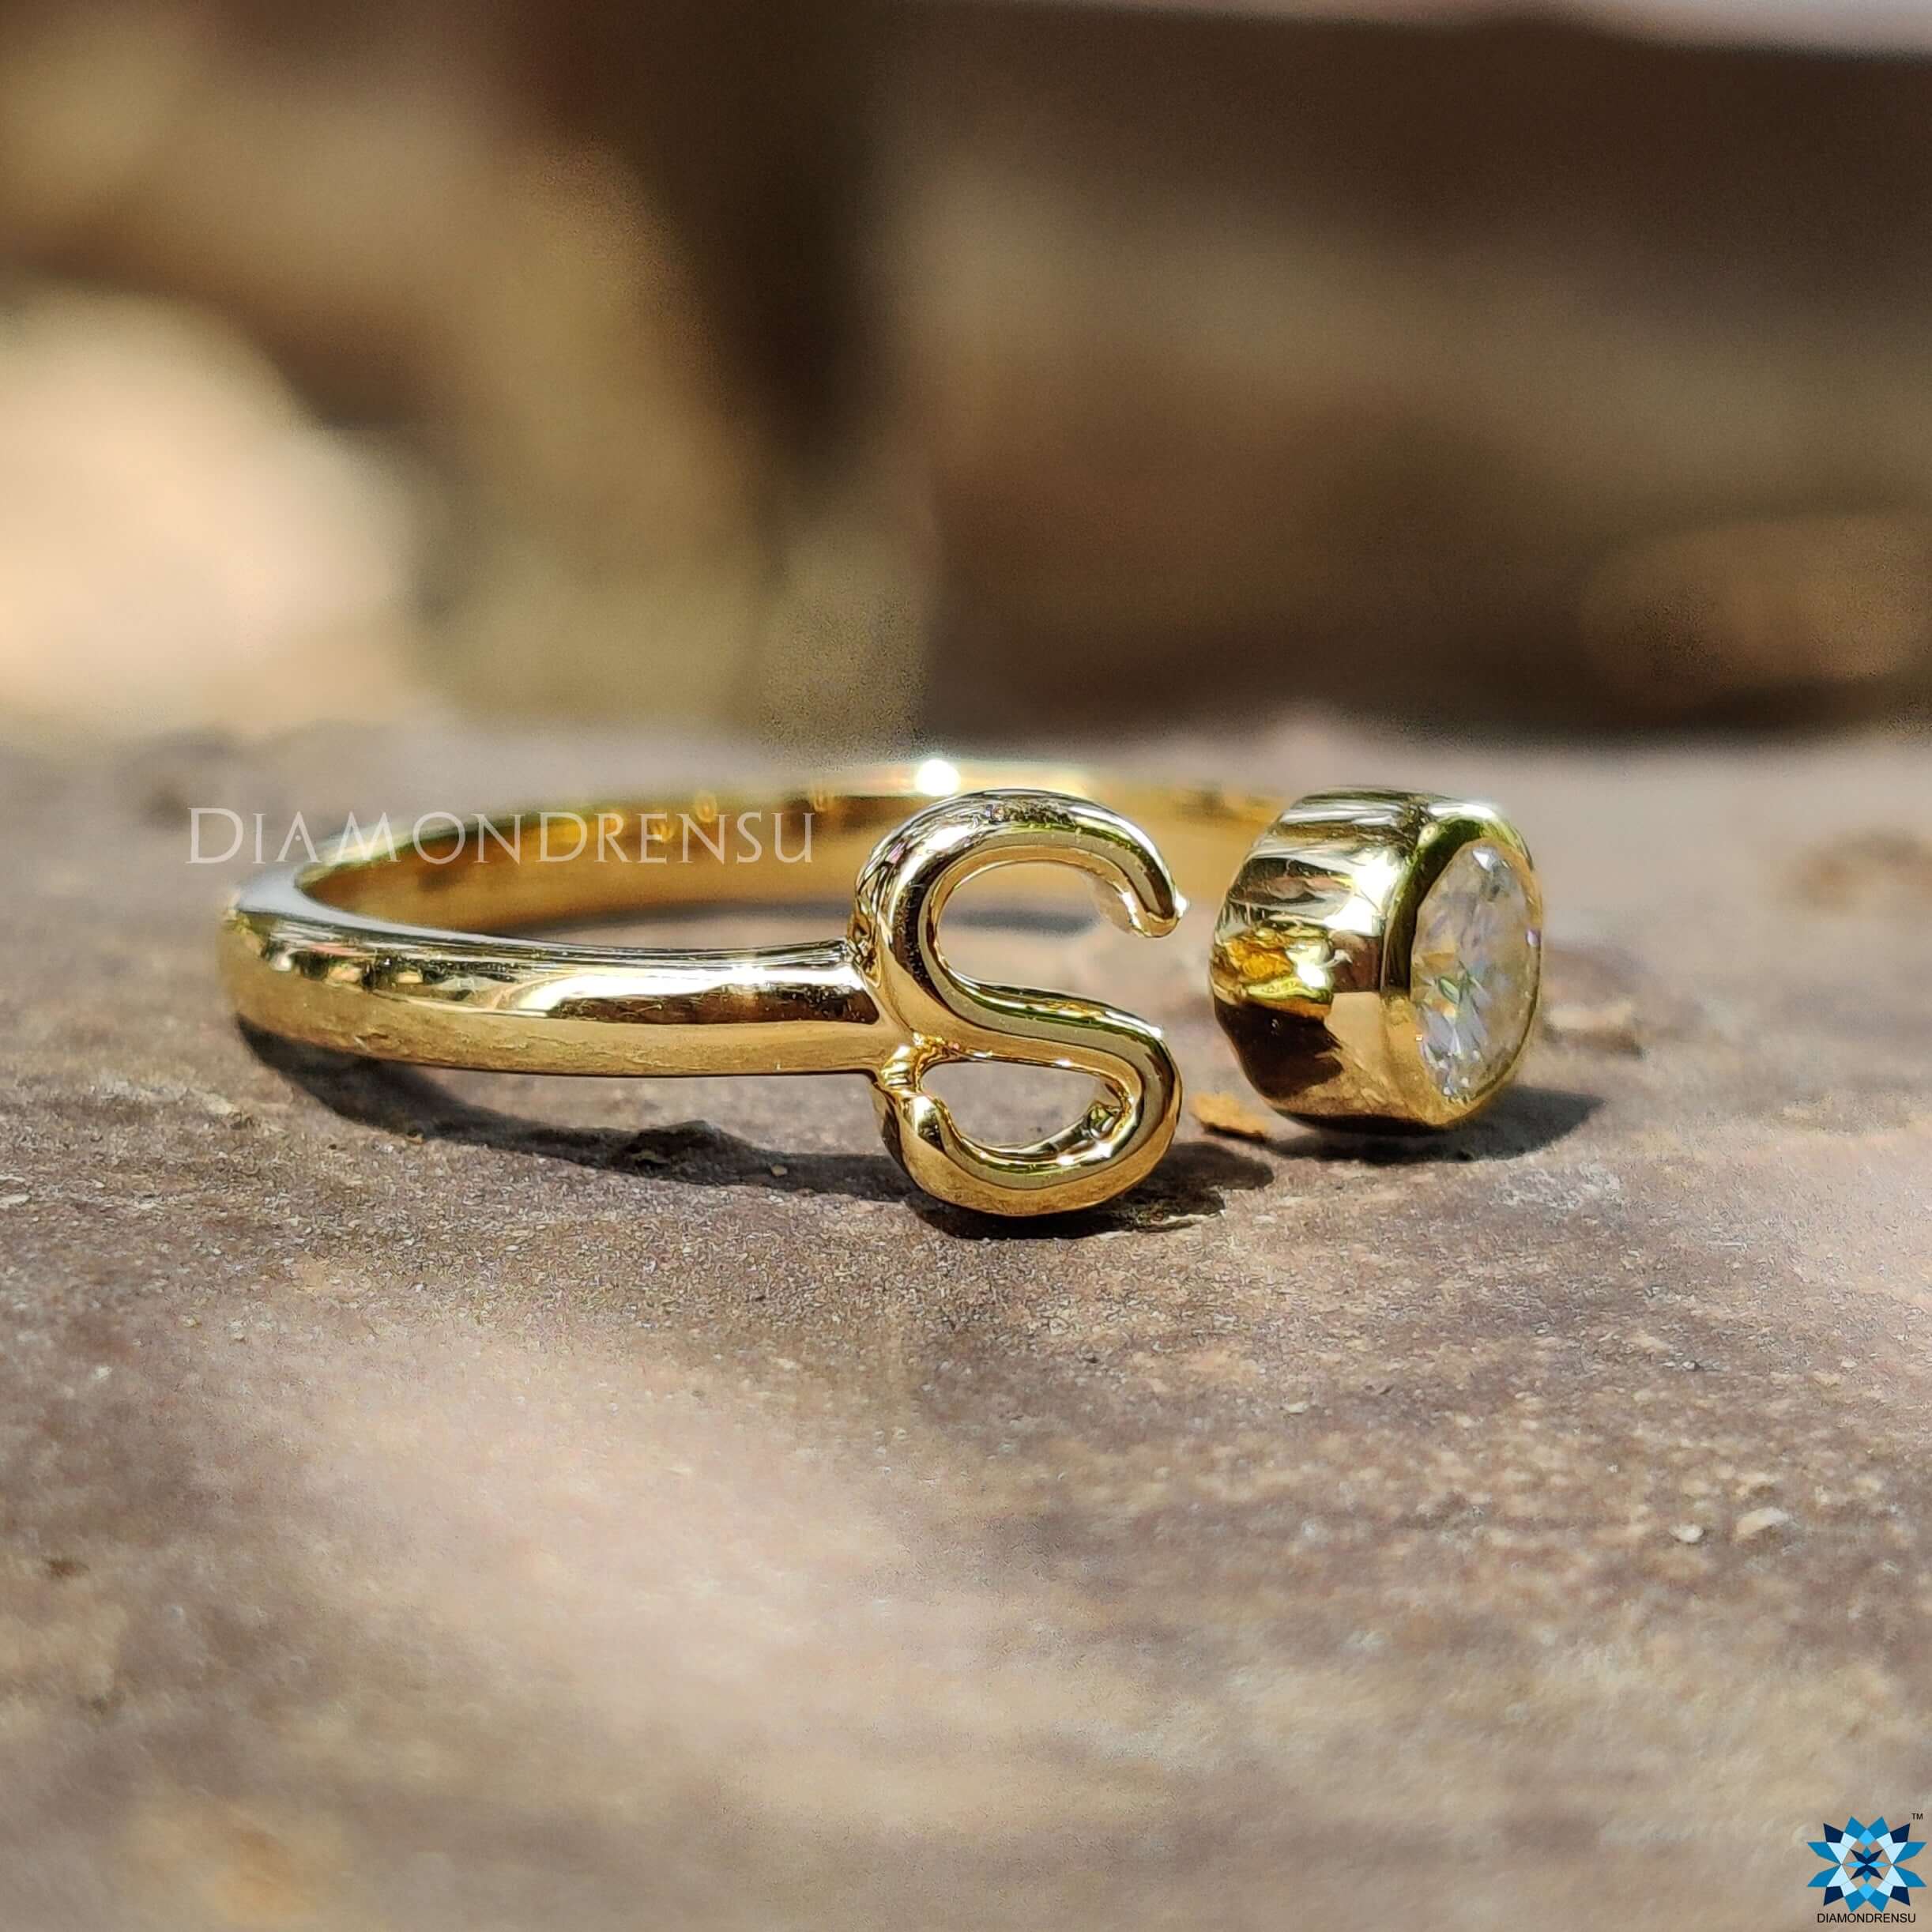 Buy Joyalukkas 22 kt Gold Ring Online At Best Price @ Tata CLiQ